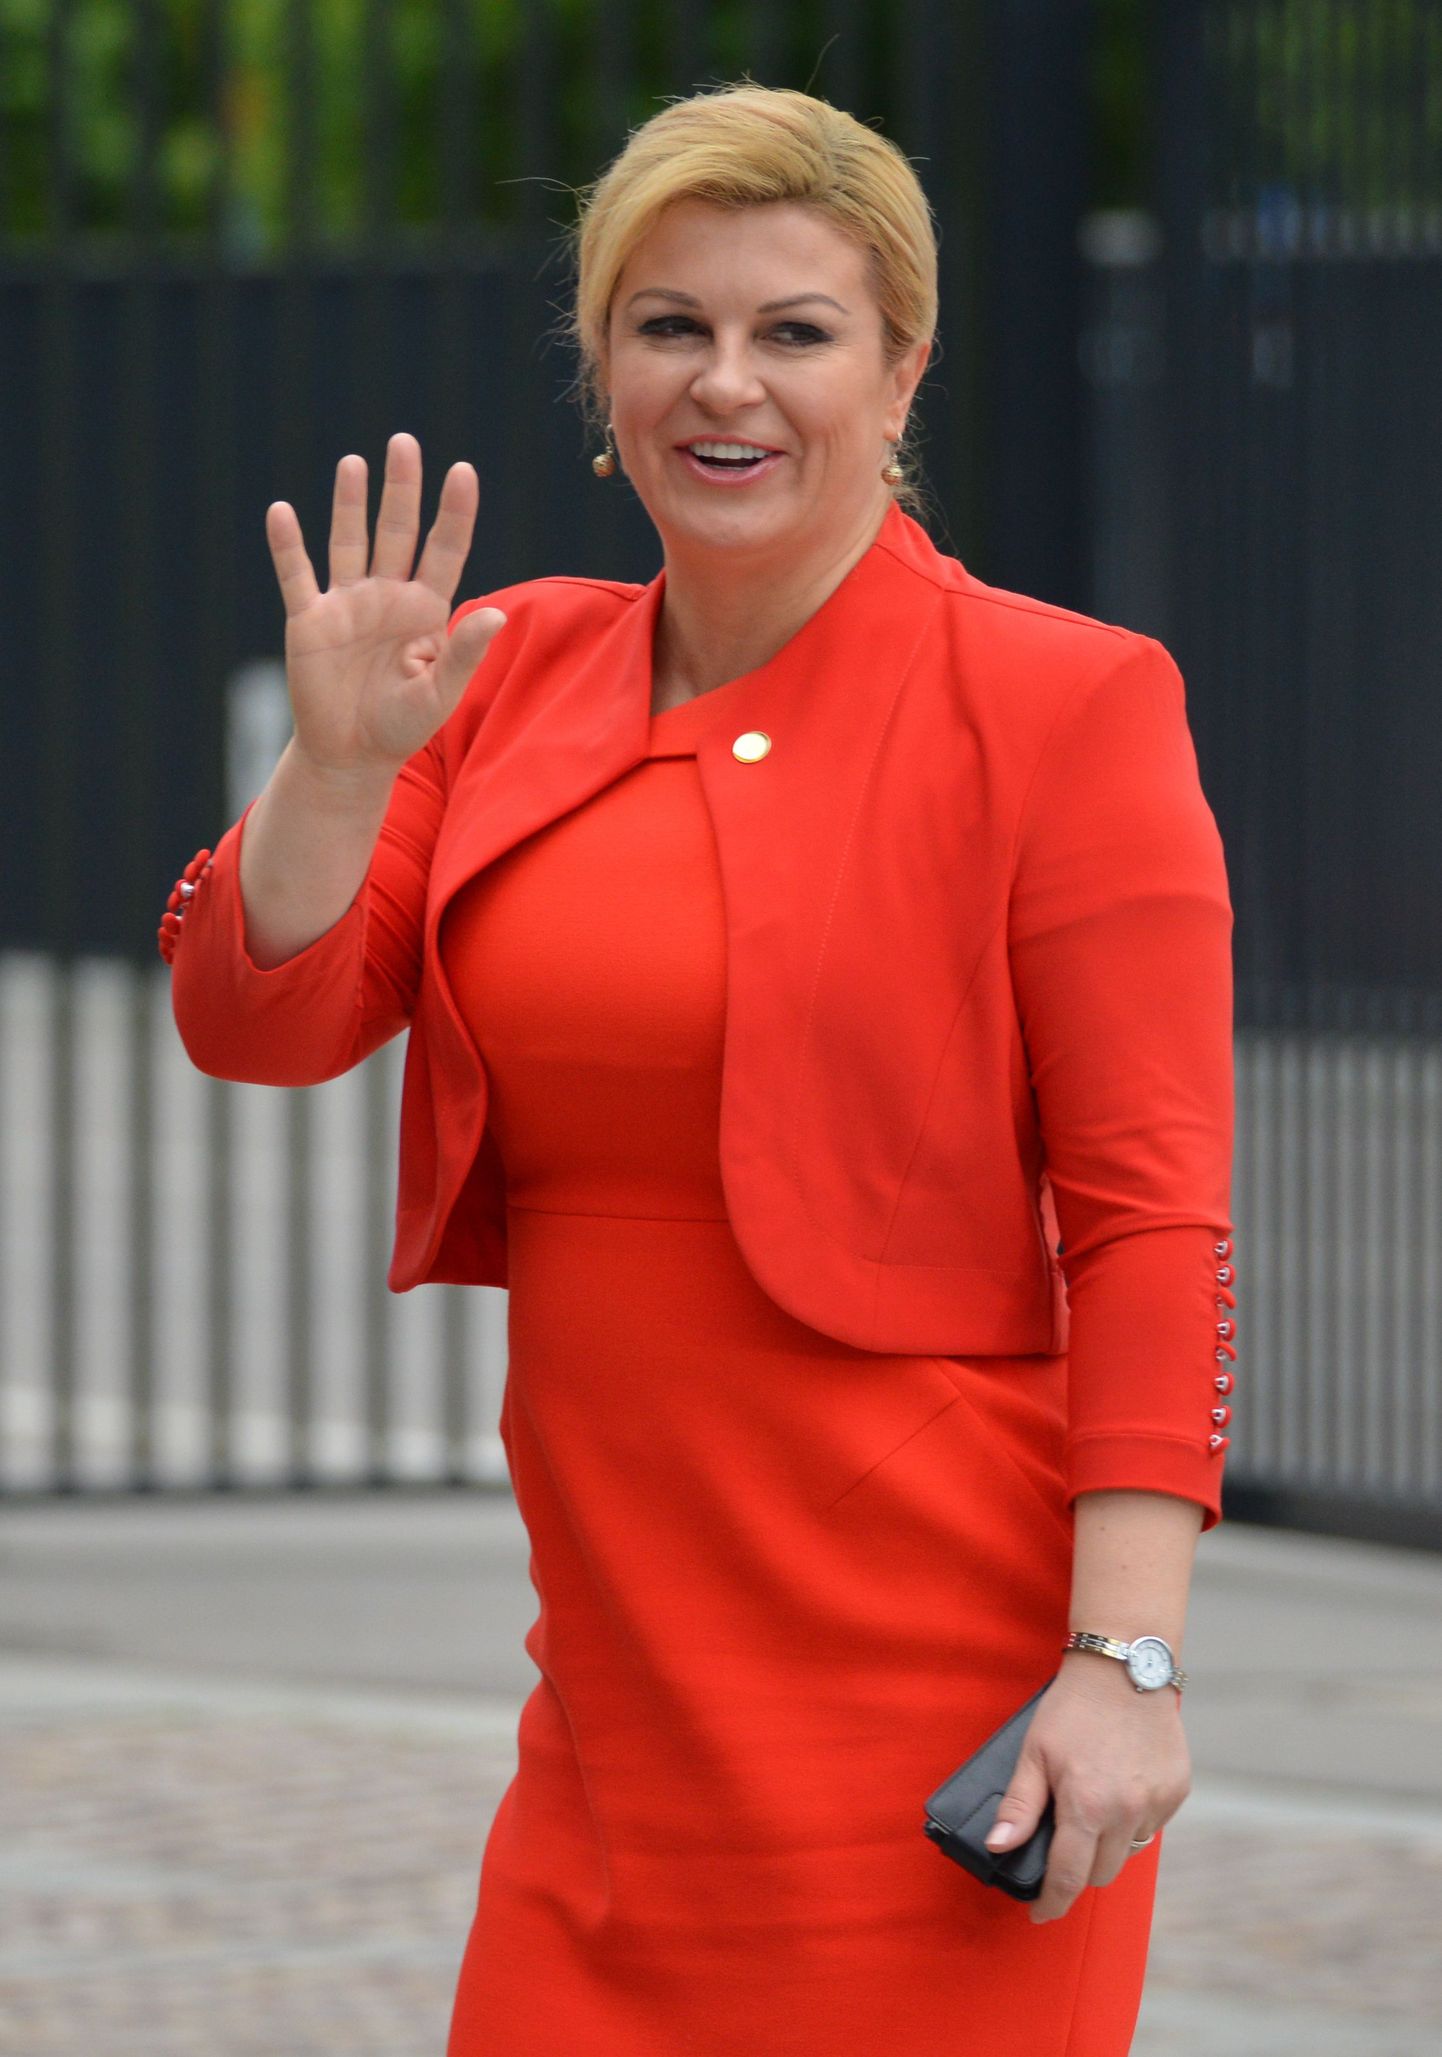 Horvaatia president Kolinda Grabar-Kitarović